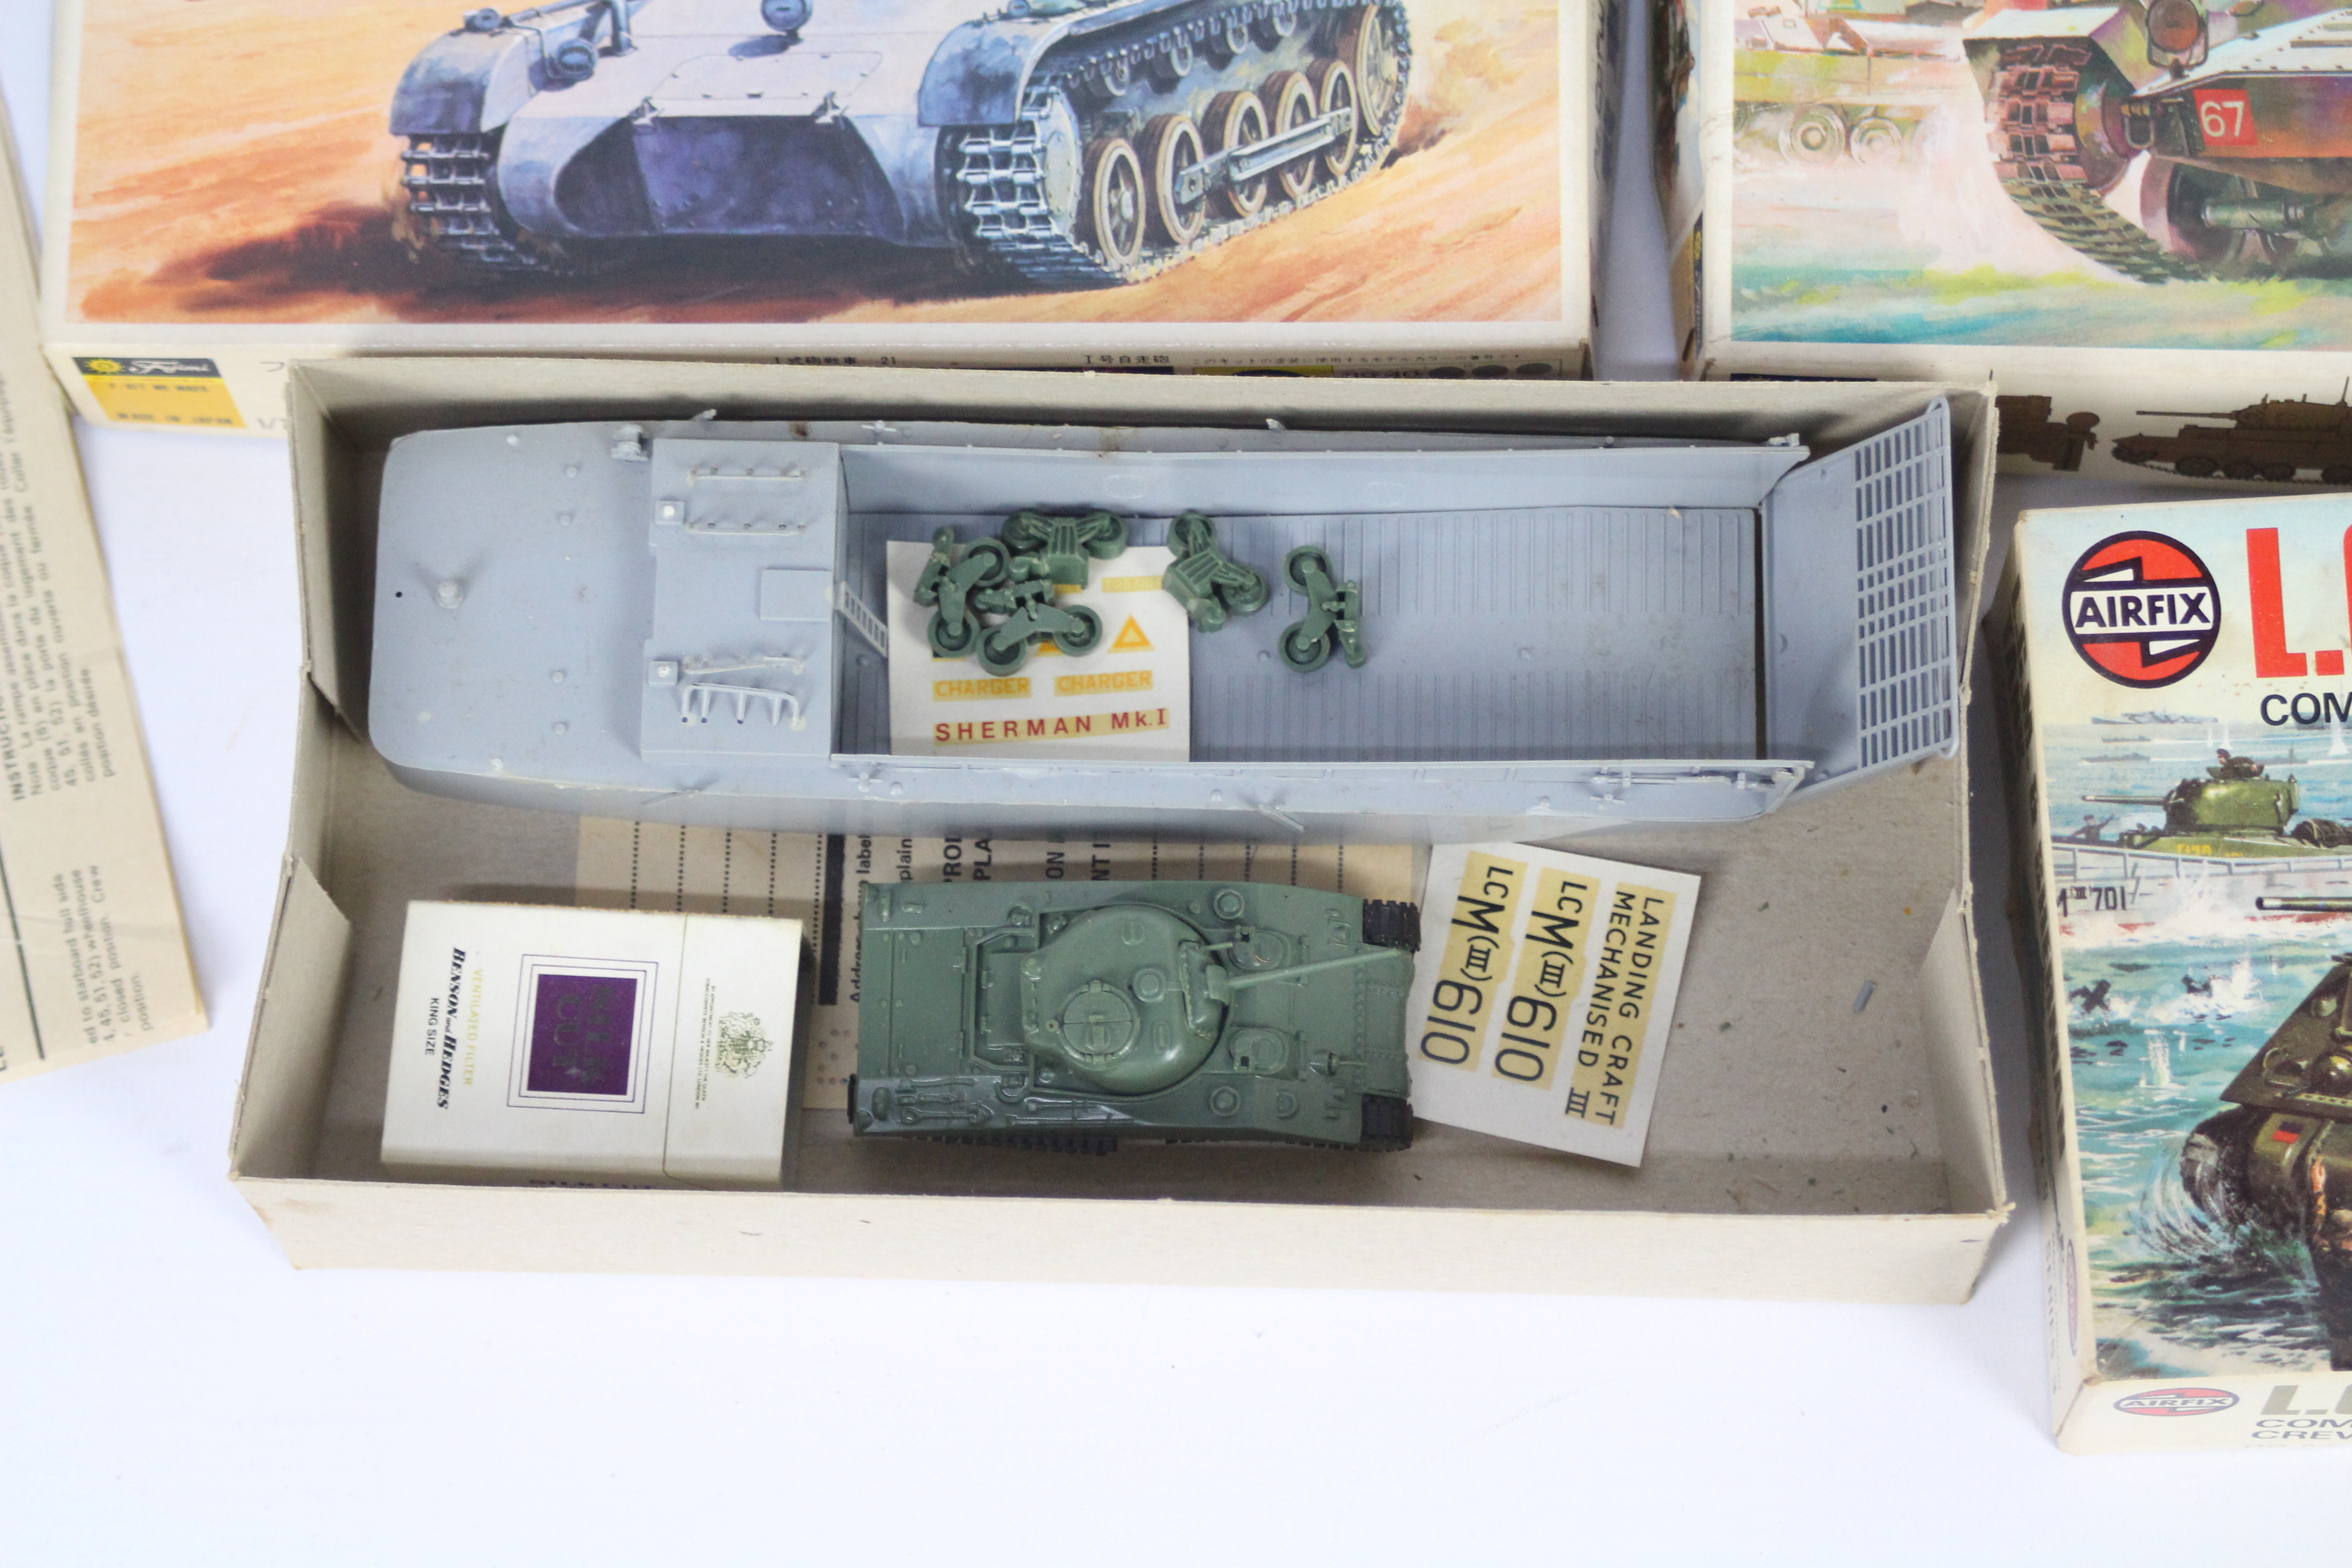 Airfix - Fujimi - Nitto Kagaku - 5 x boxed military model kits in 1:76 scale including LCM III & - Image 5 of 6